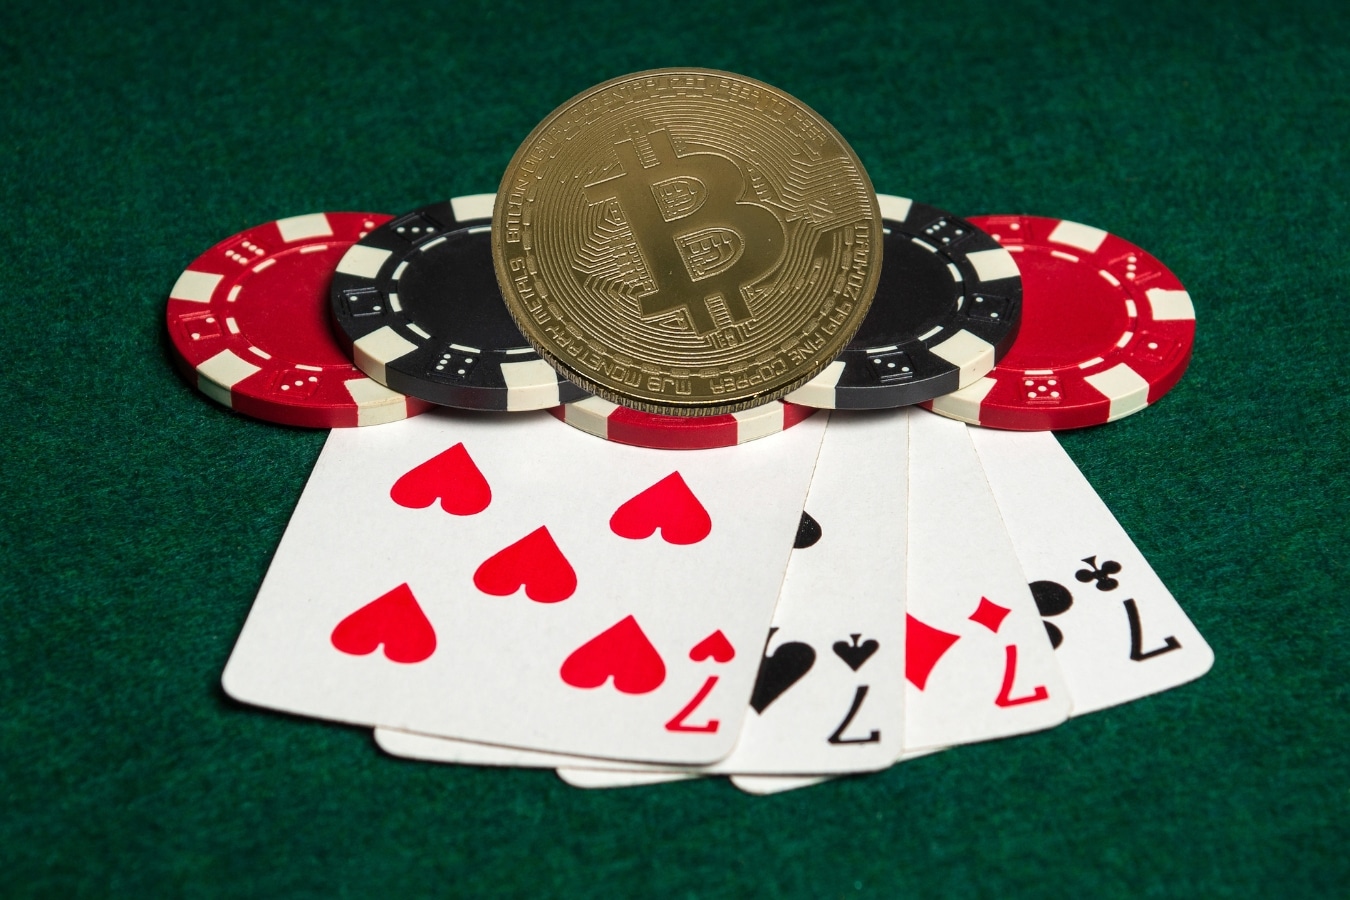 Bitcoin poker bonuses every player should know